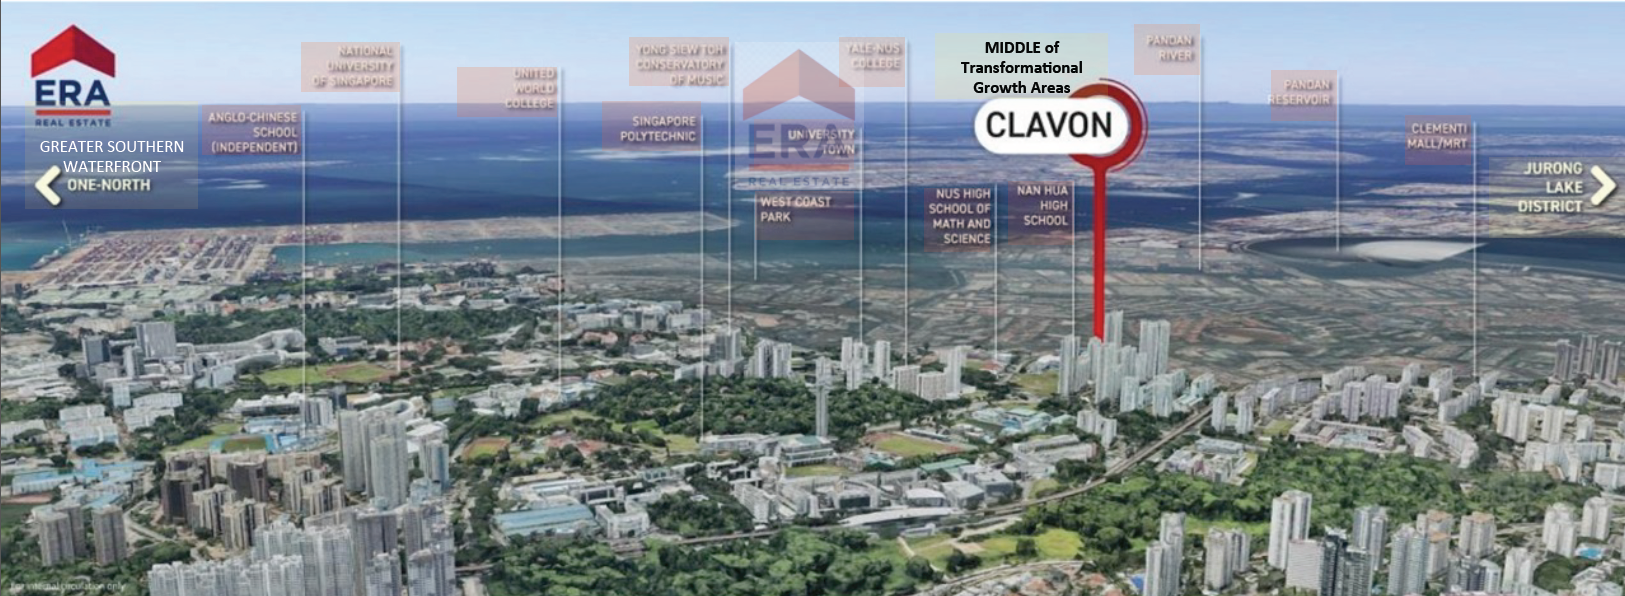 clavon potential.PNG